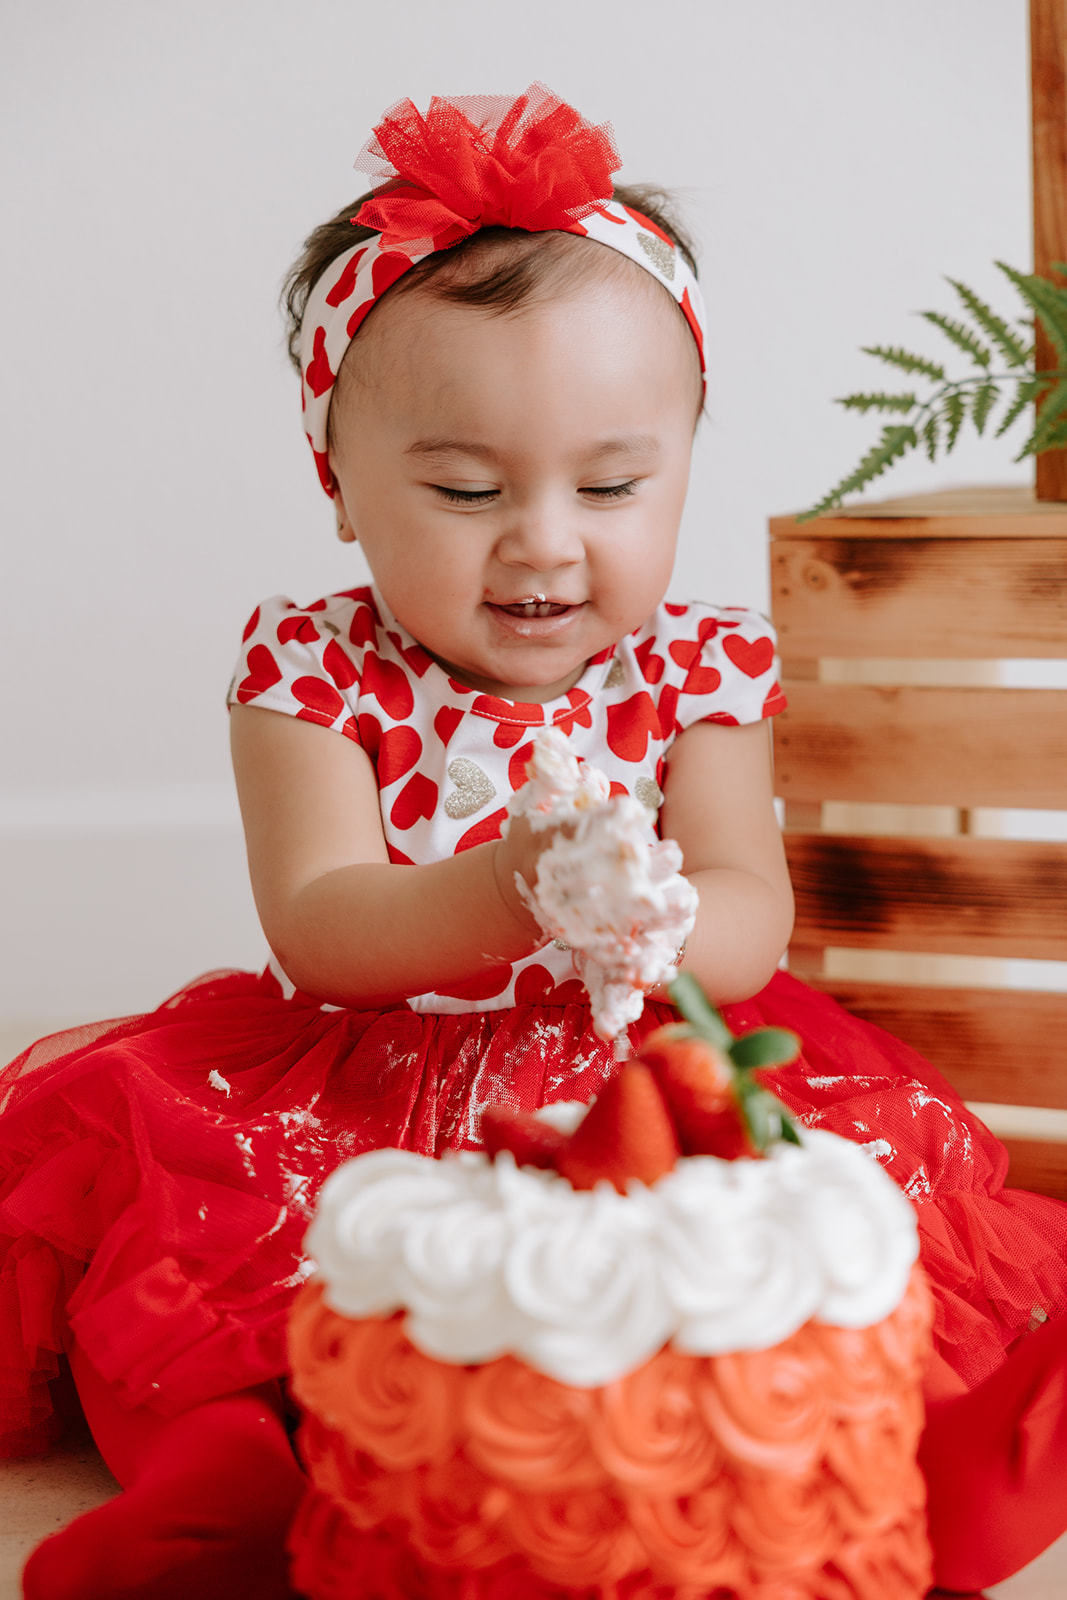 Strawberry-themed first birthday baby cake smash photoshoot.